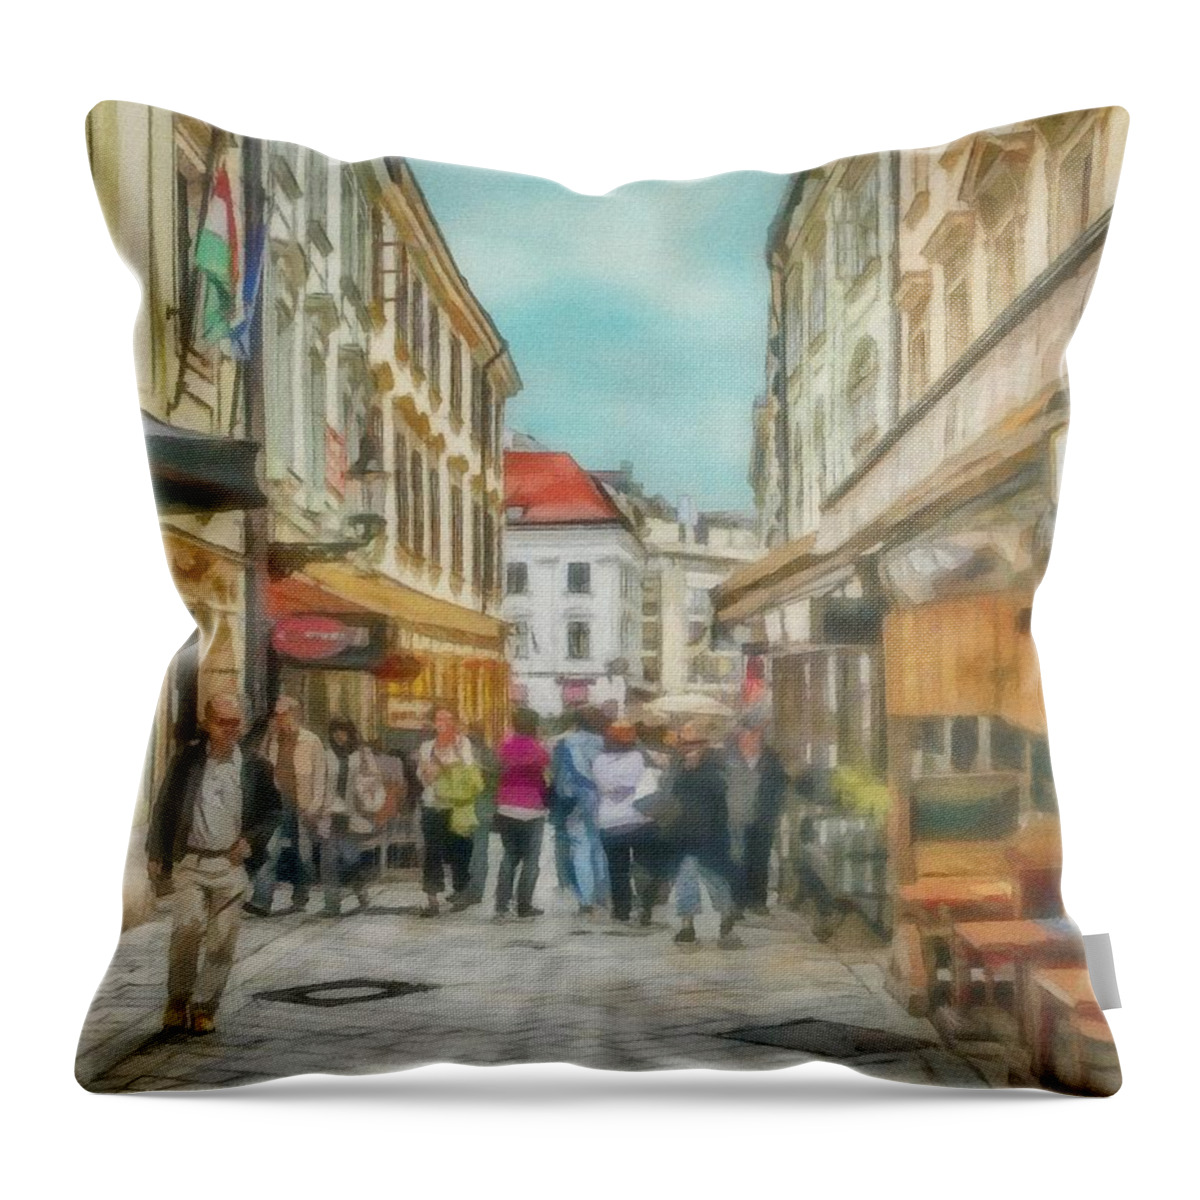 Bratislava Throw Pillow featuring the painting Bratislava Street Scene by Jeffrey Kolker